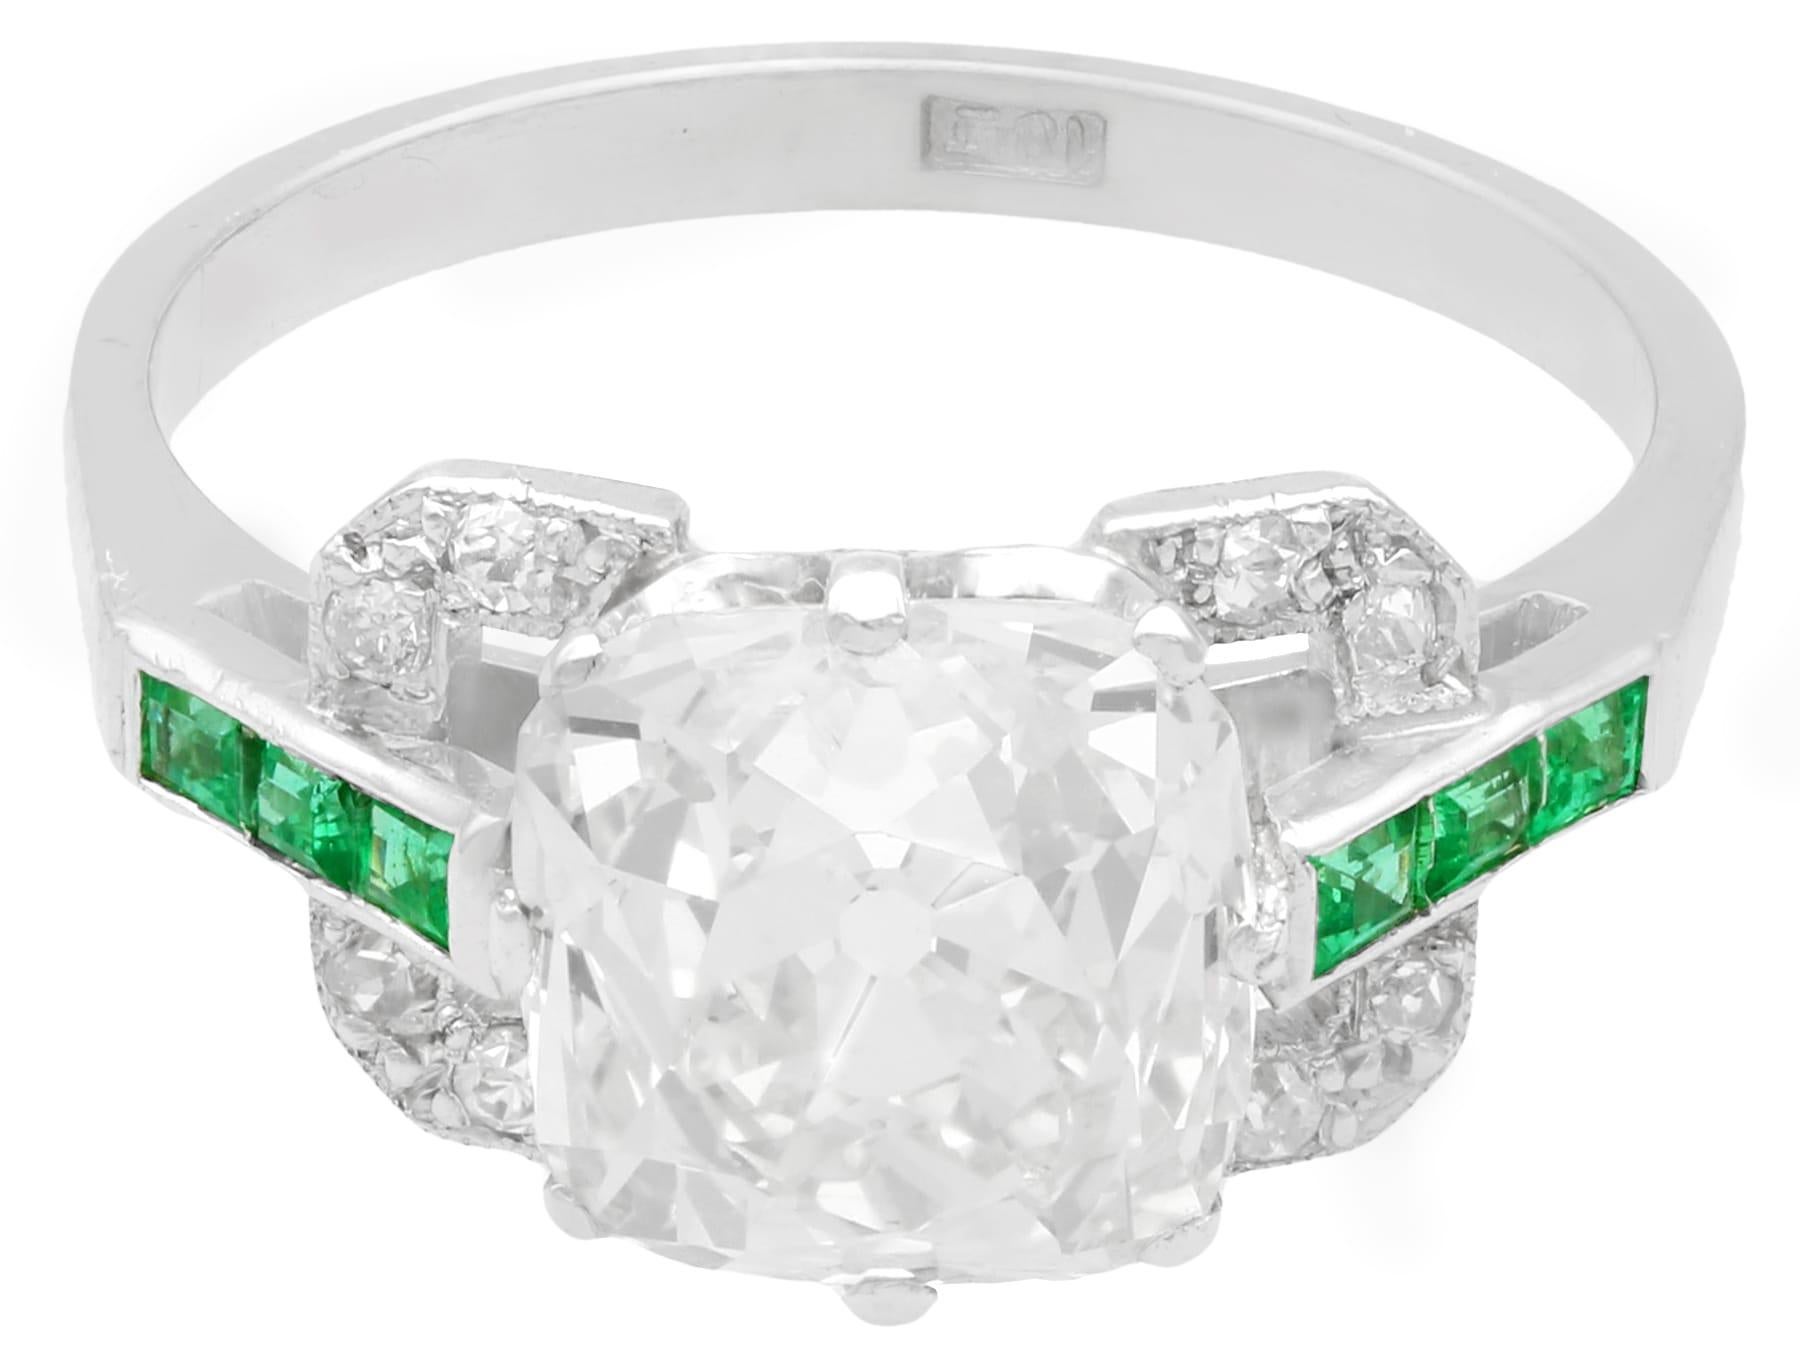 1930s emerald ring